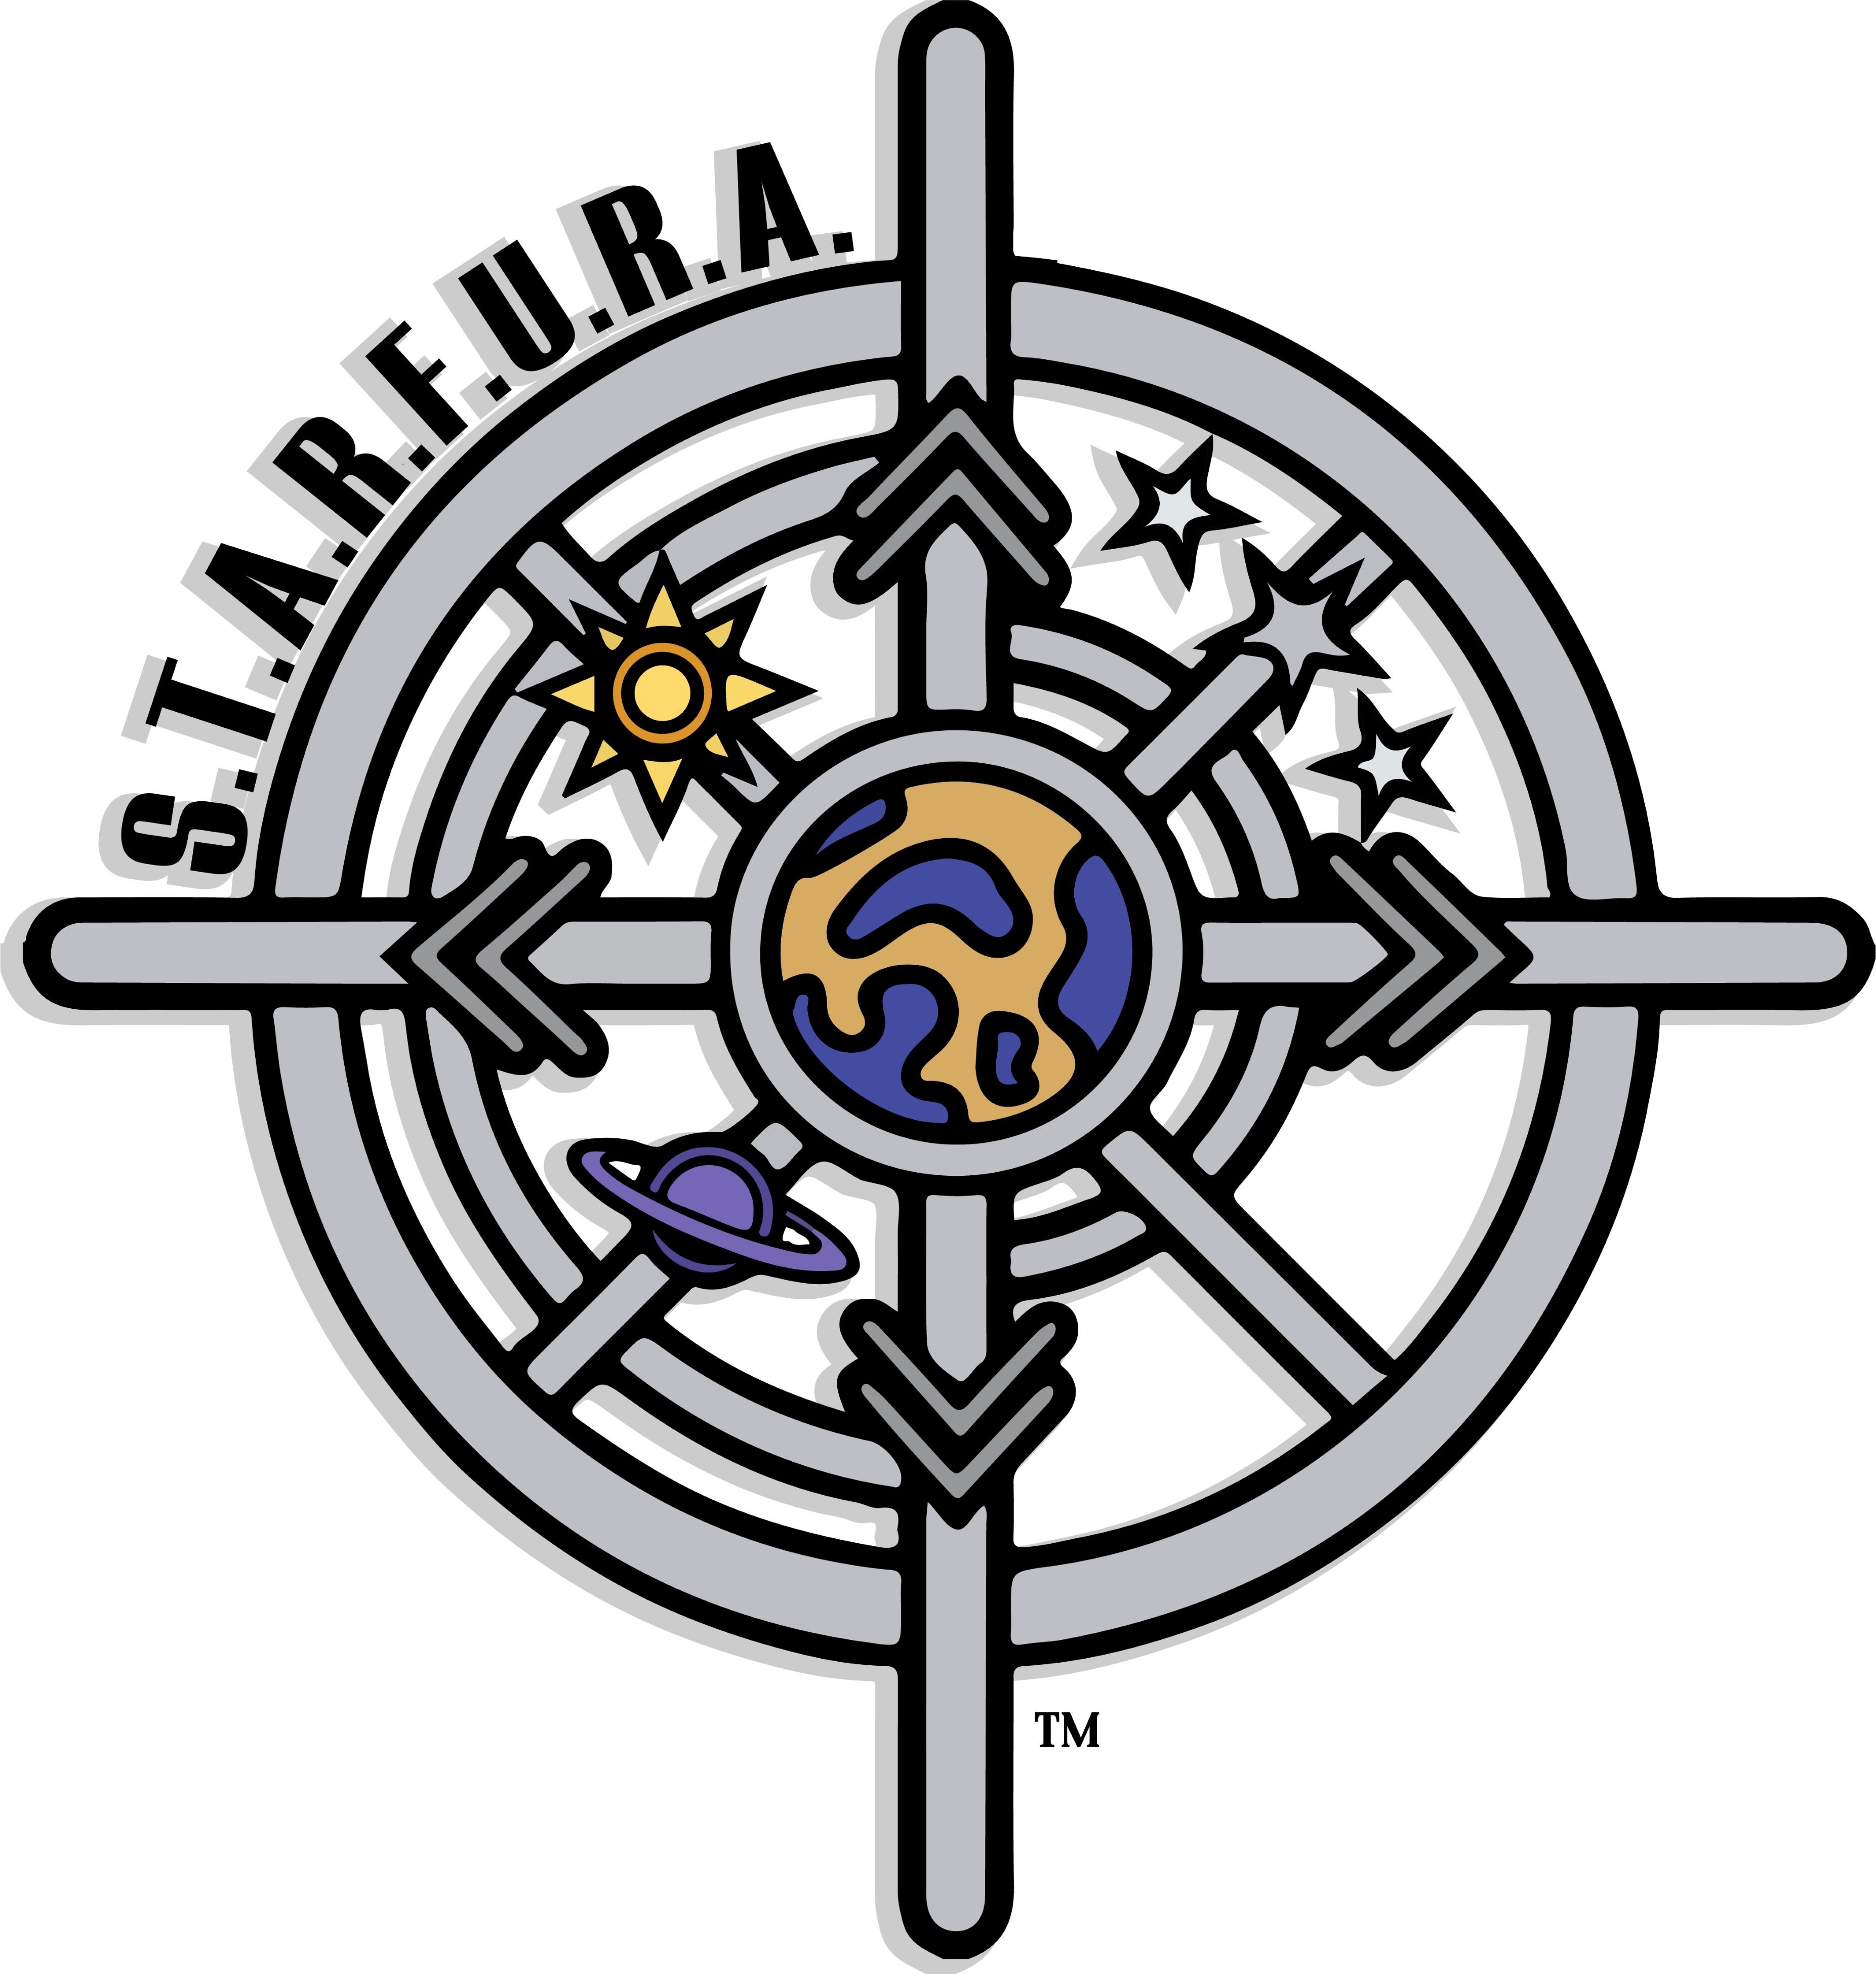 S.T.A.R.F.U.R.A. logo